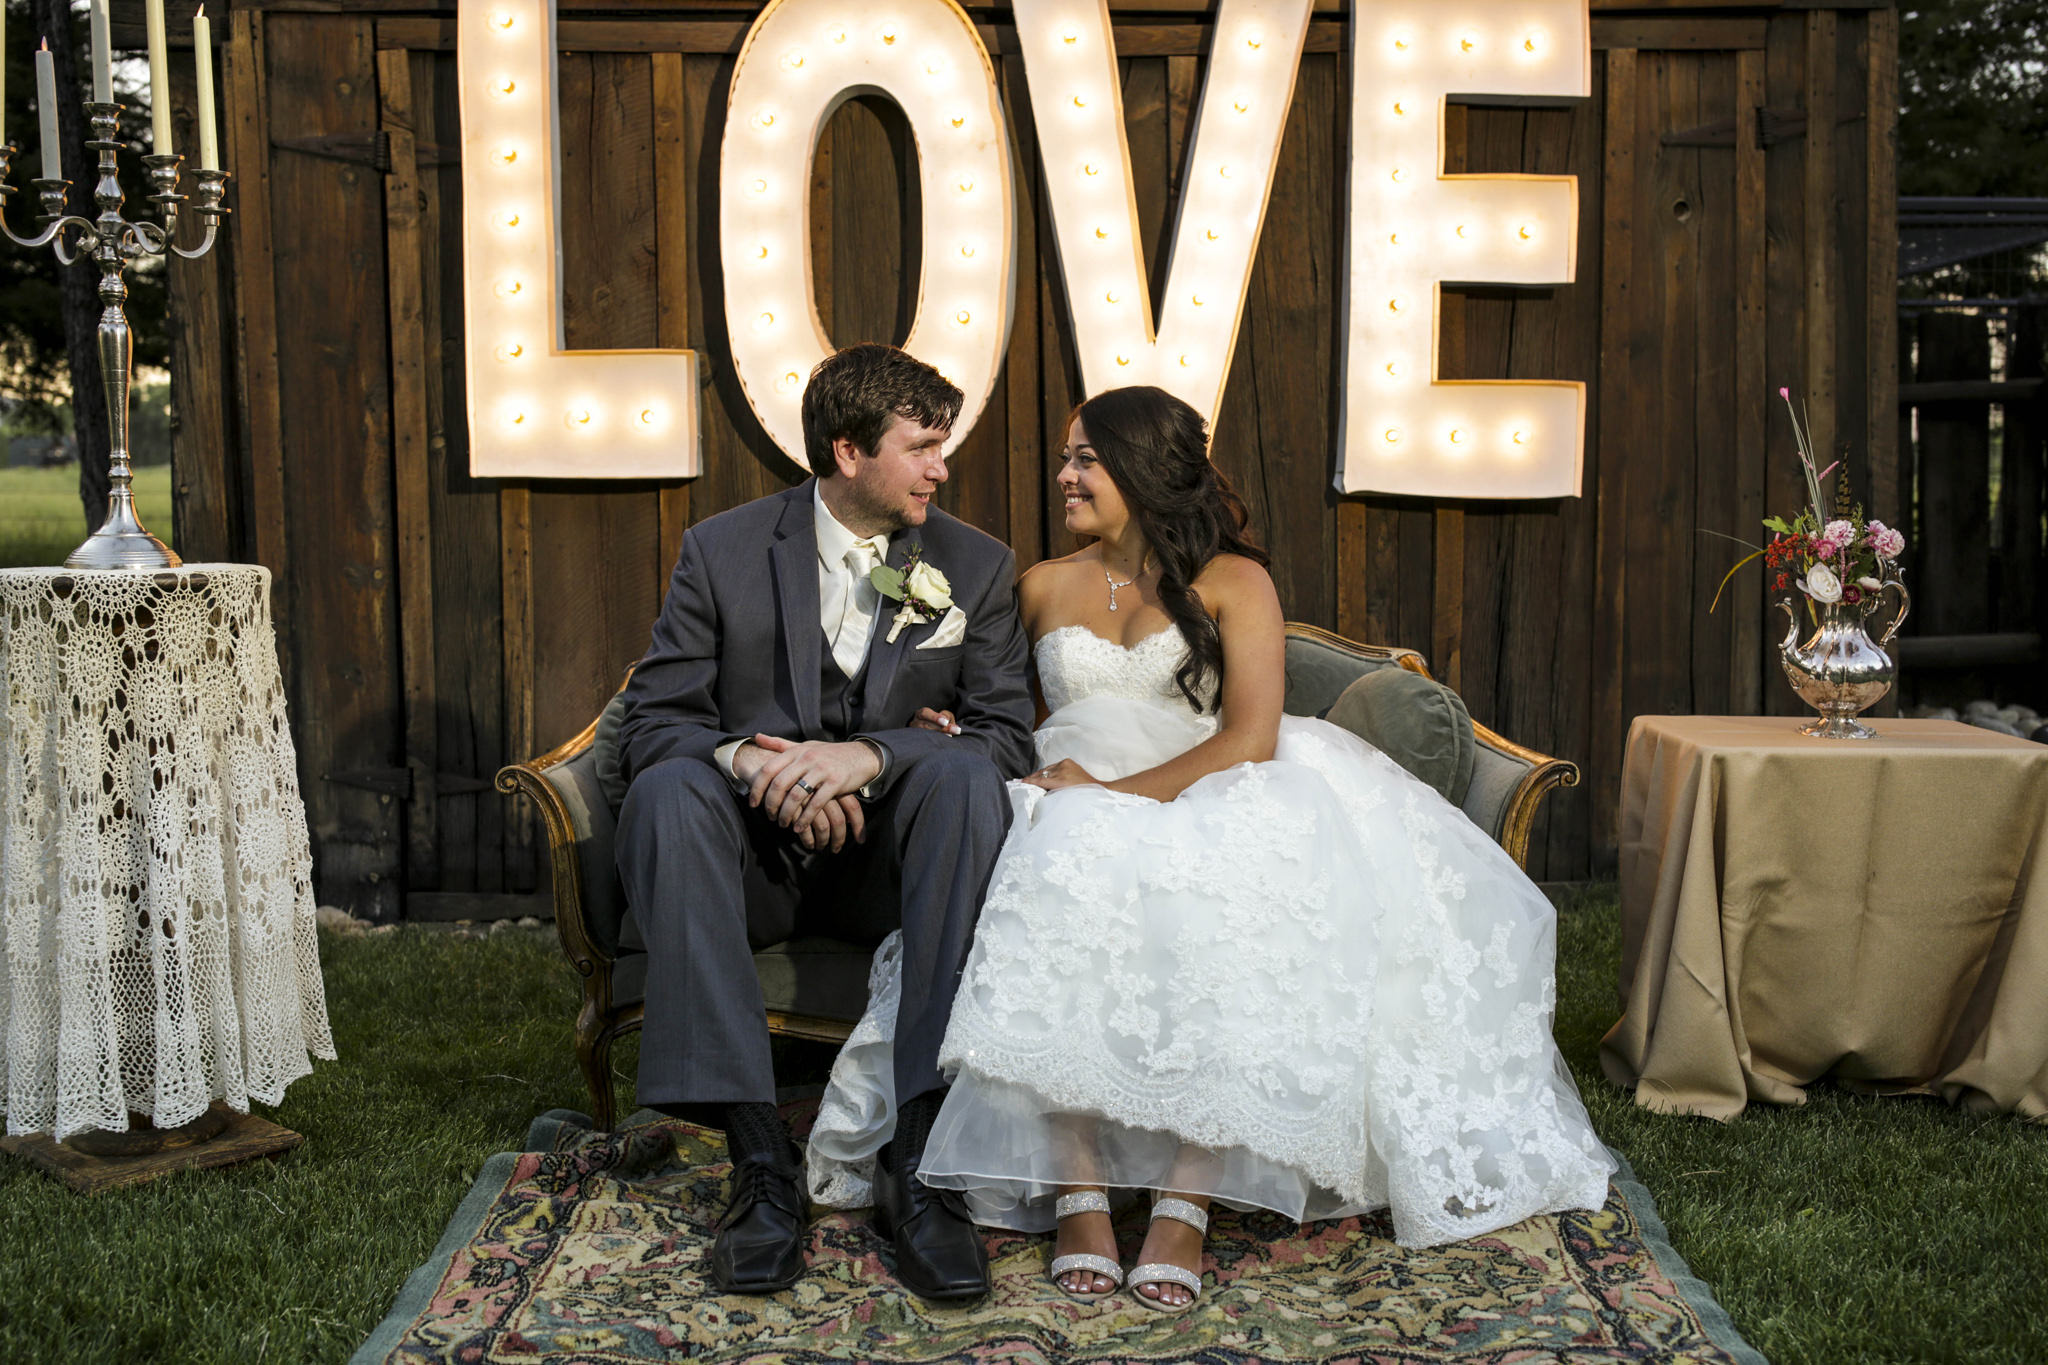 Danae & Ryan's Wedding at Shupe Homestead by Colorado Wedding Photographers, All Digital Photo and Video